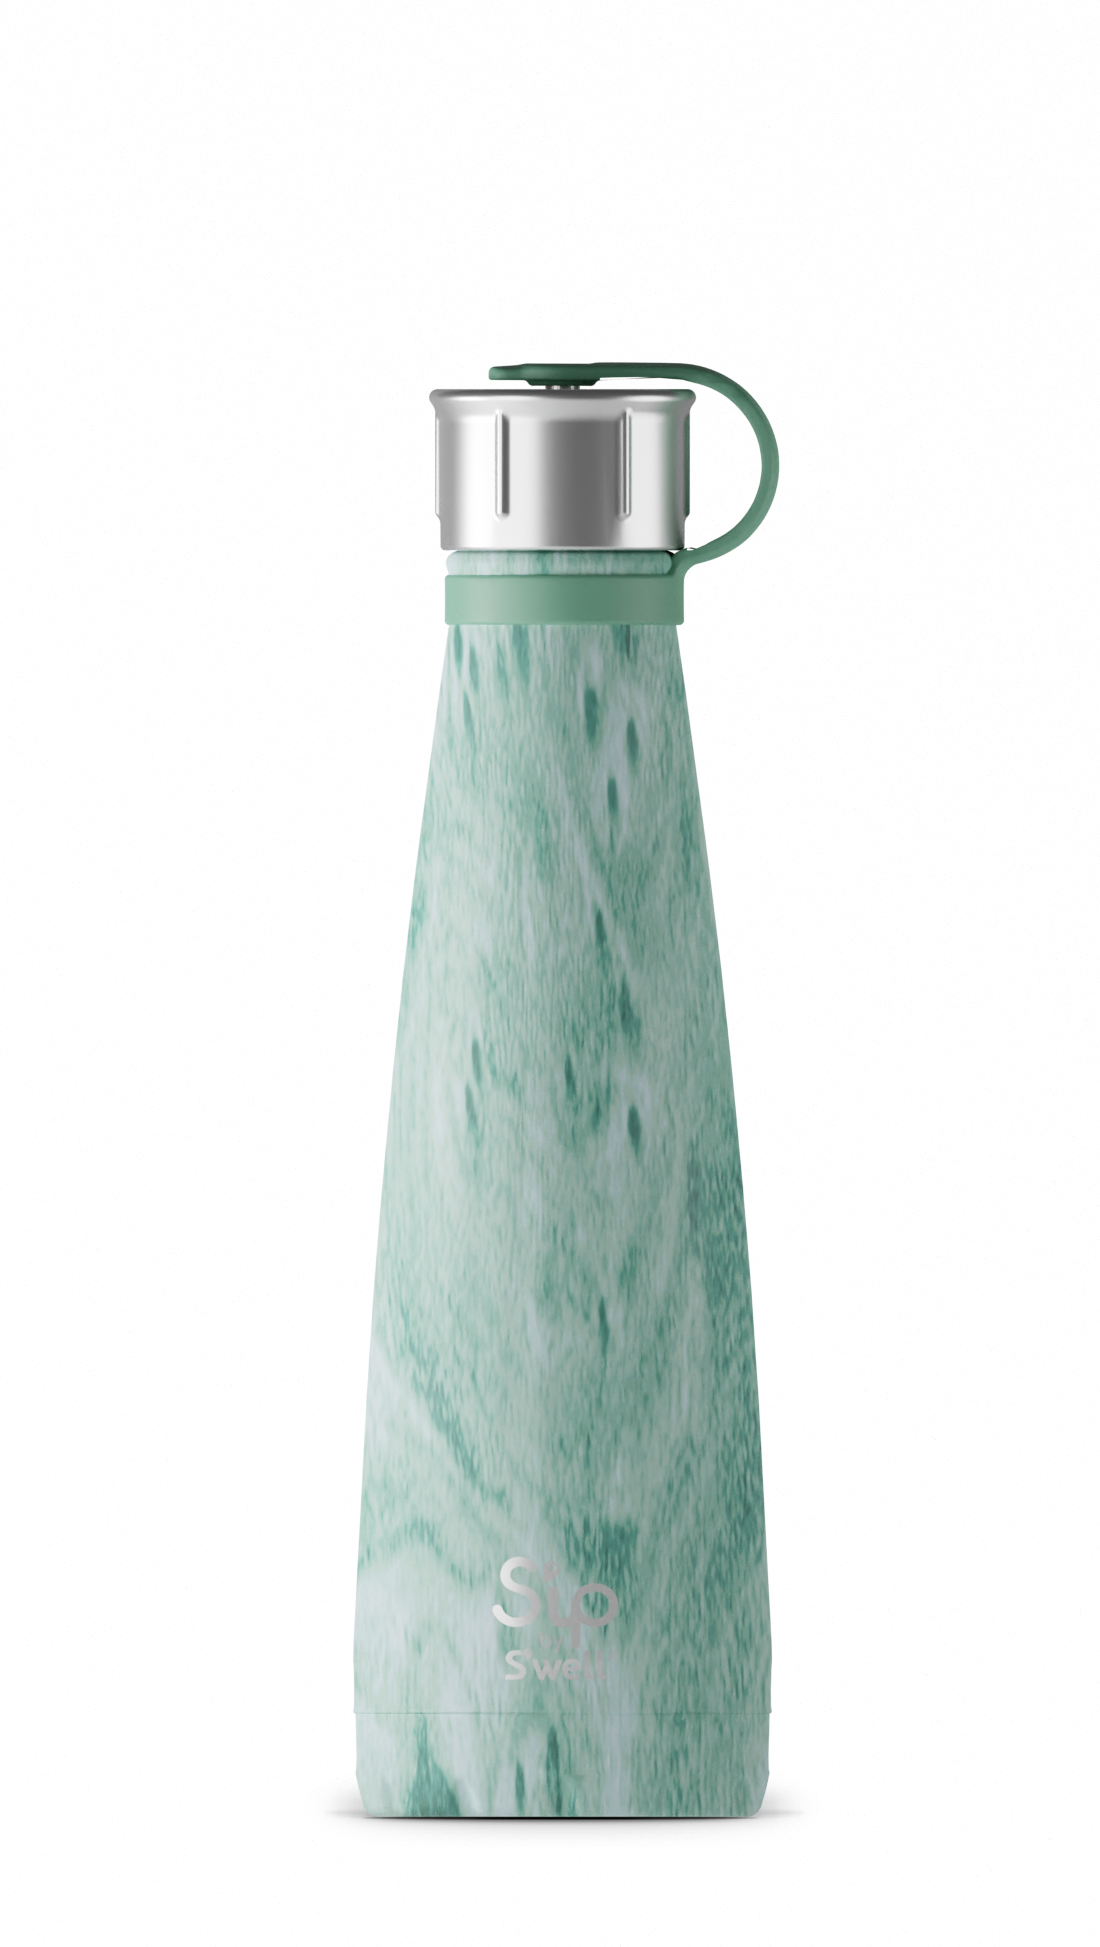 S'ip by S'well Water Bottle 15oz Stainless Steel - Spearmint Green